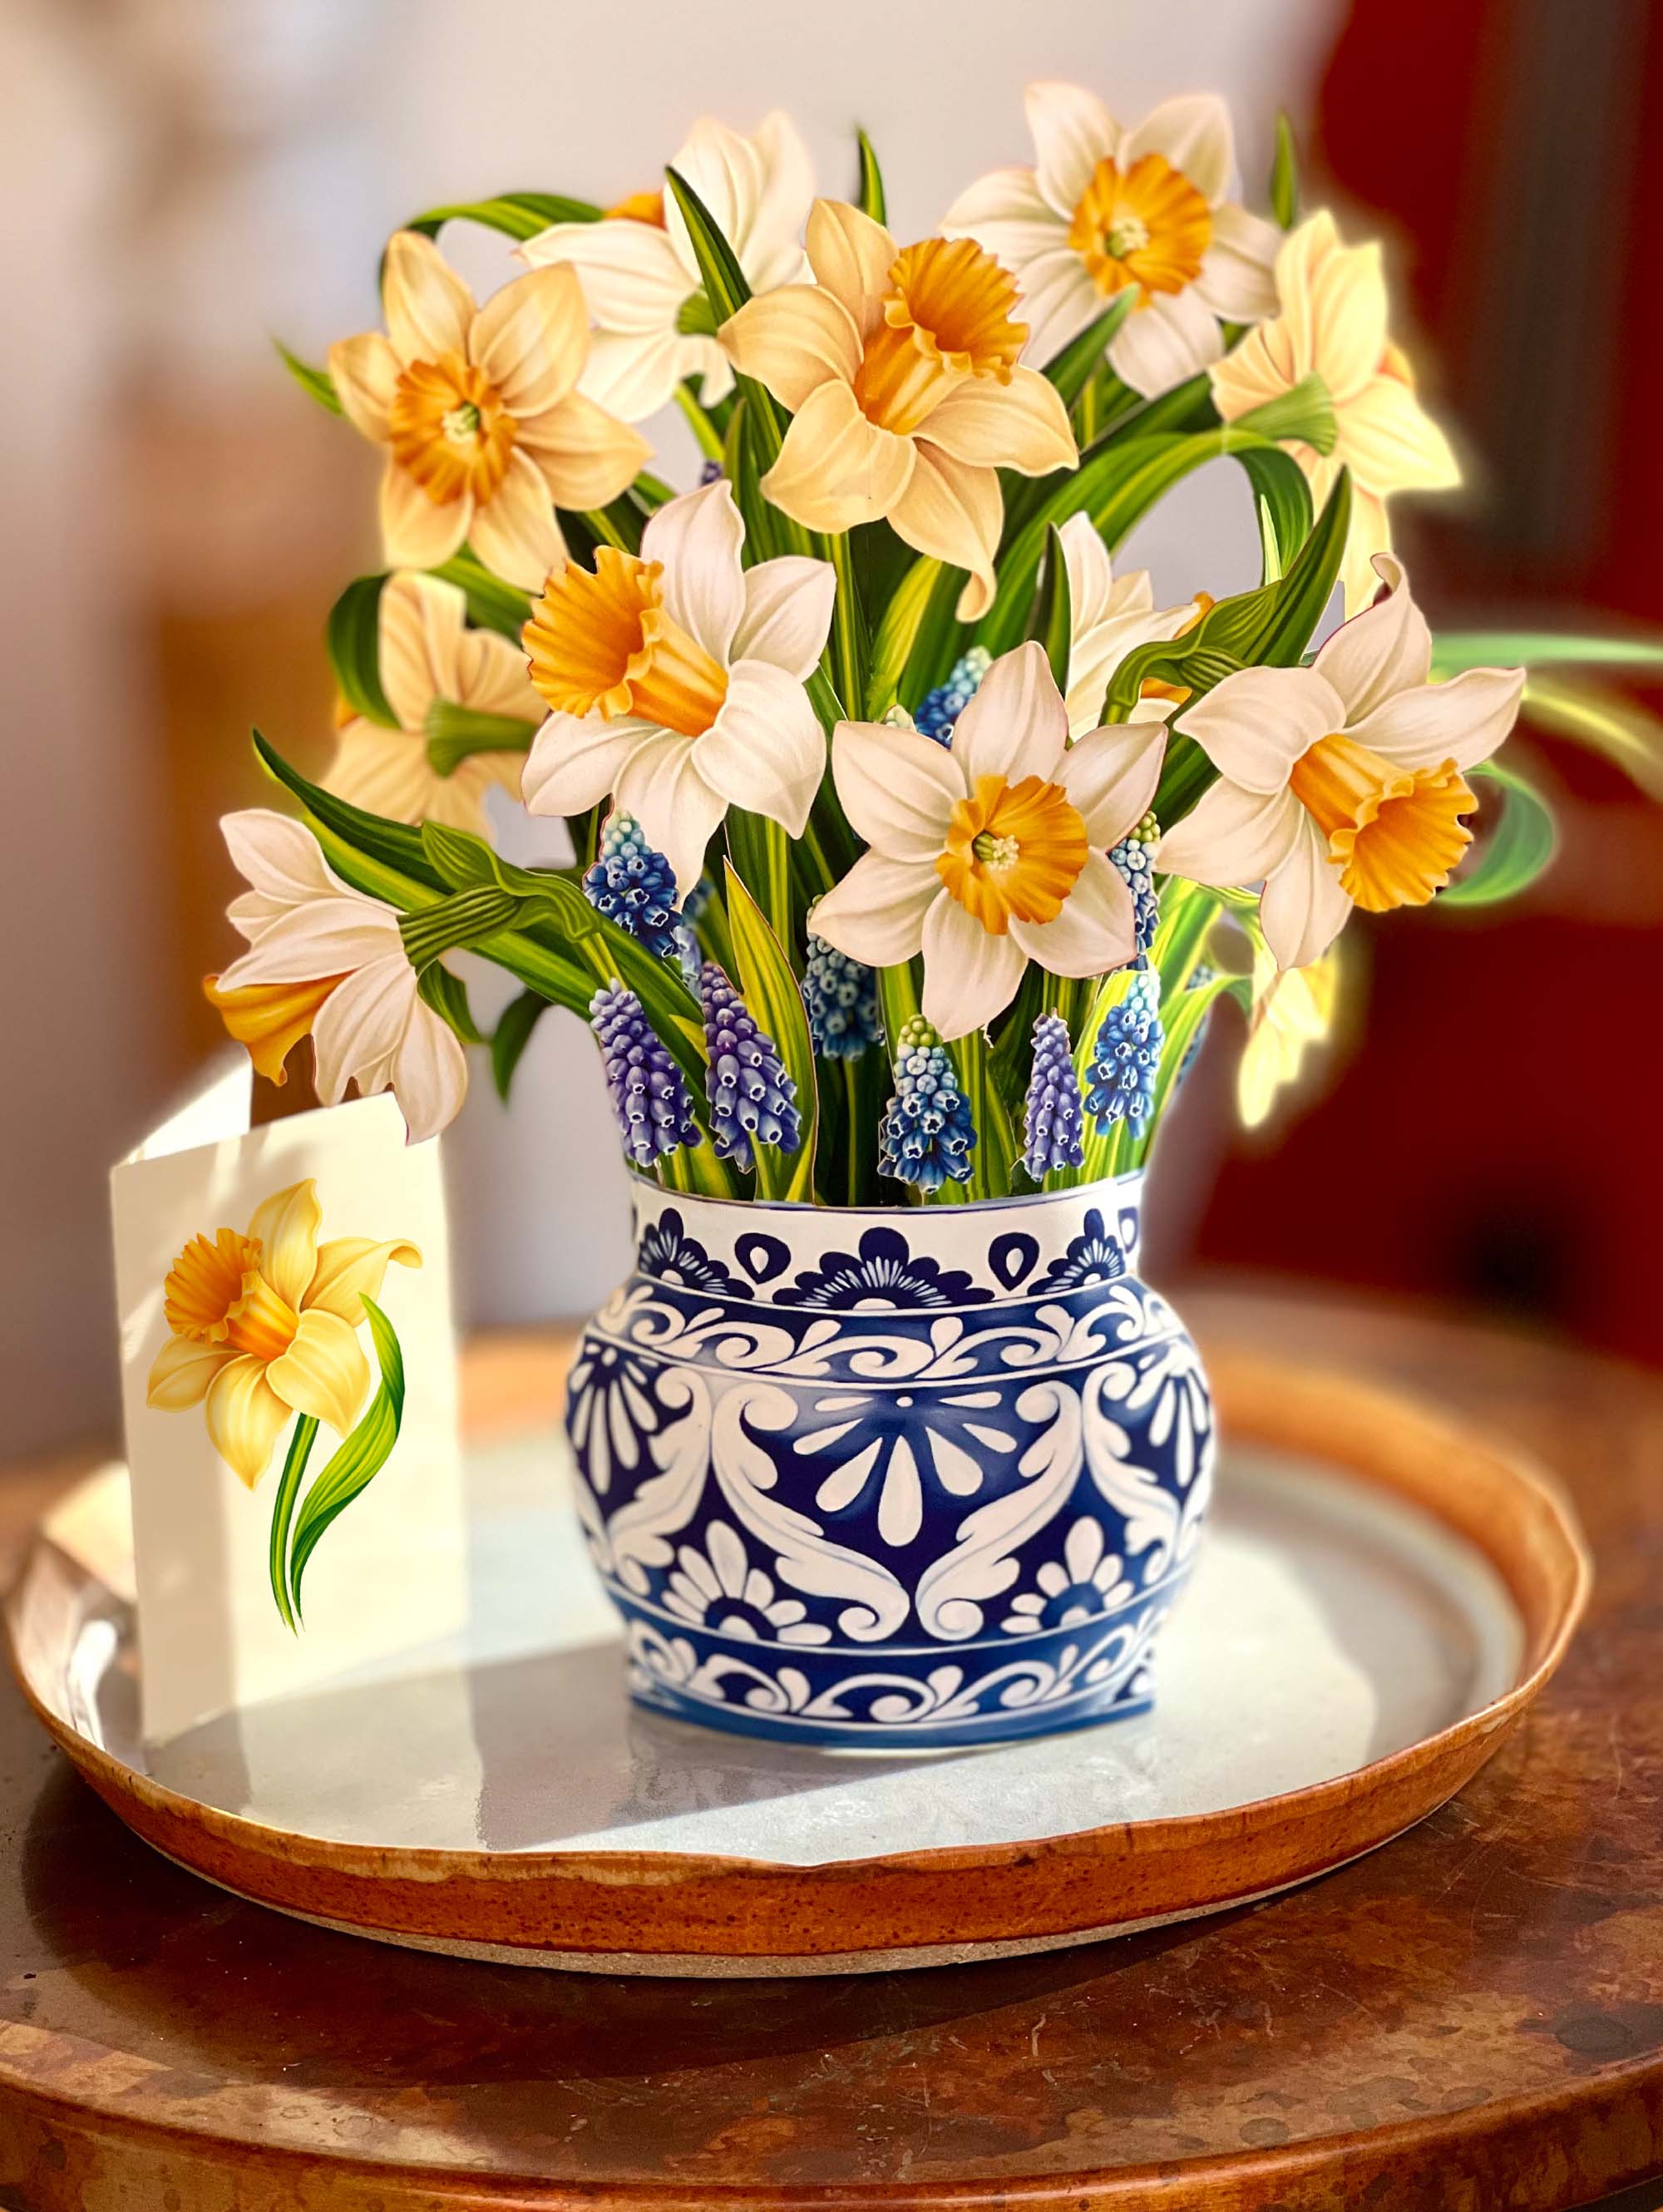 English Daffodils Pop-up Greeting Card